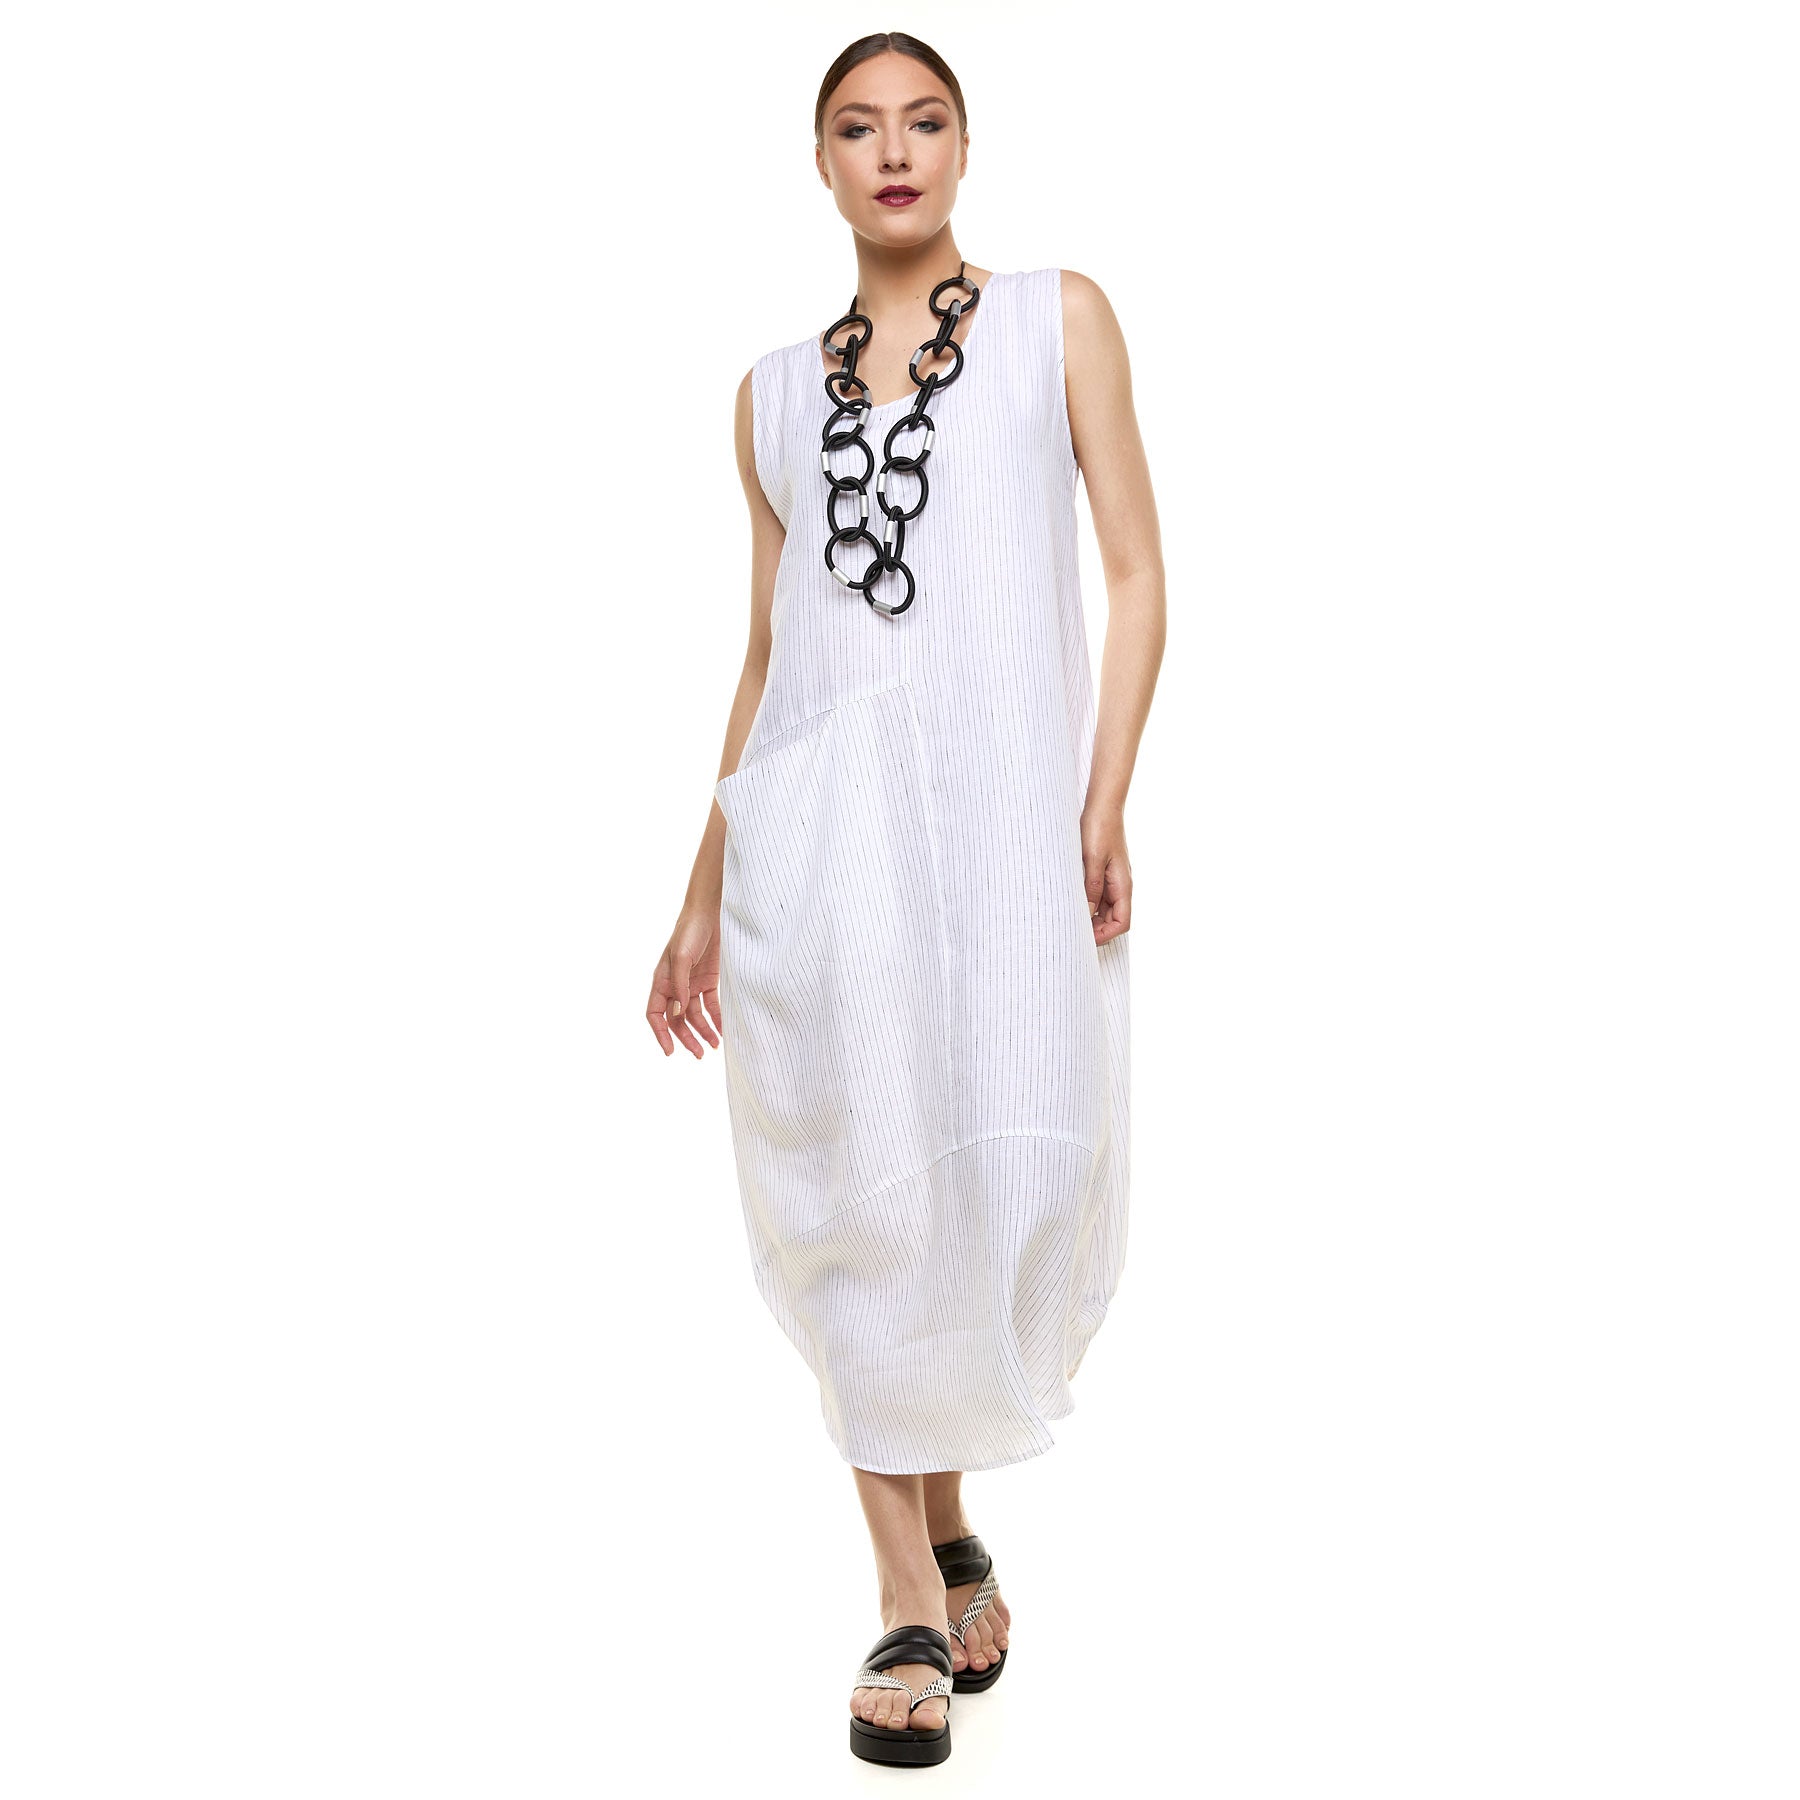 Chic & Simple Αμάνικο Φόρεμα Αντιγόνη - Άσπρο με Λεπτό Ριγέ